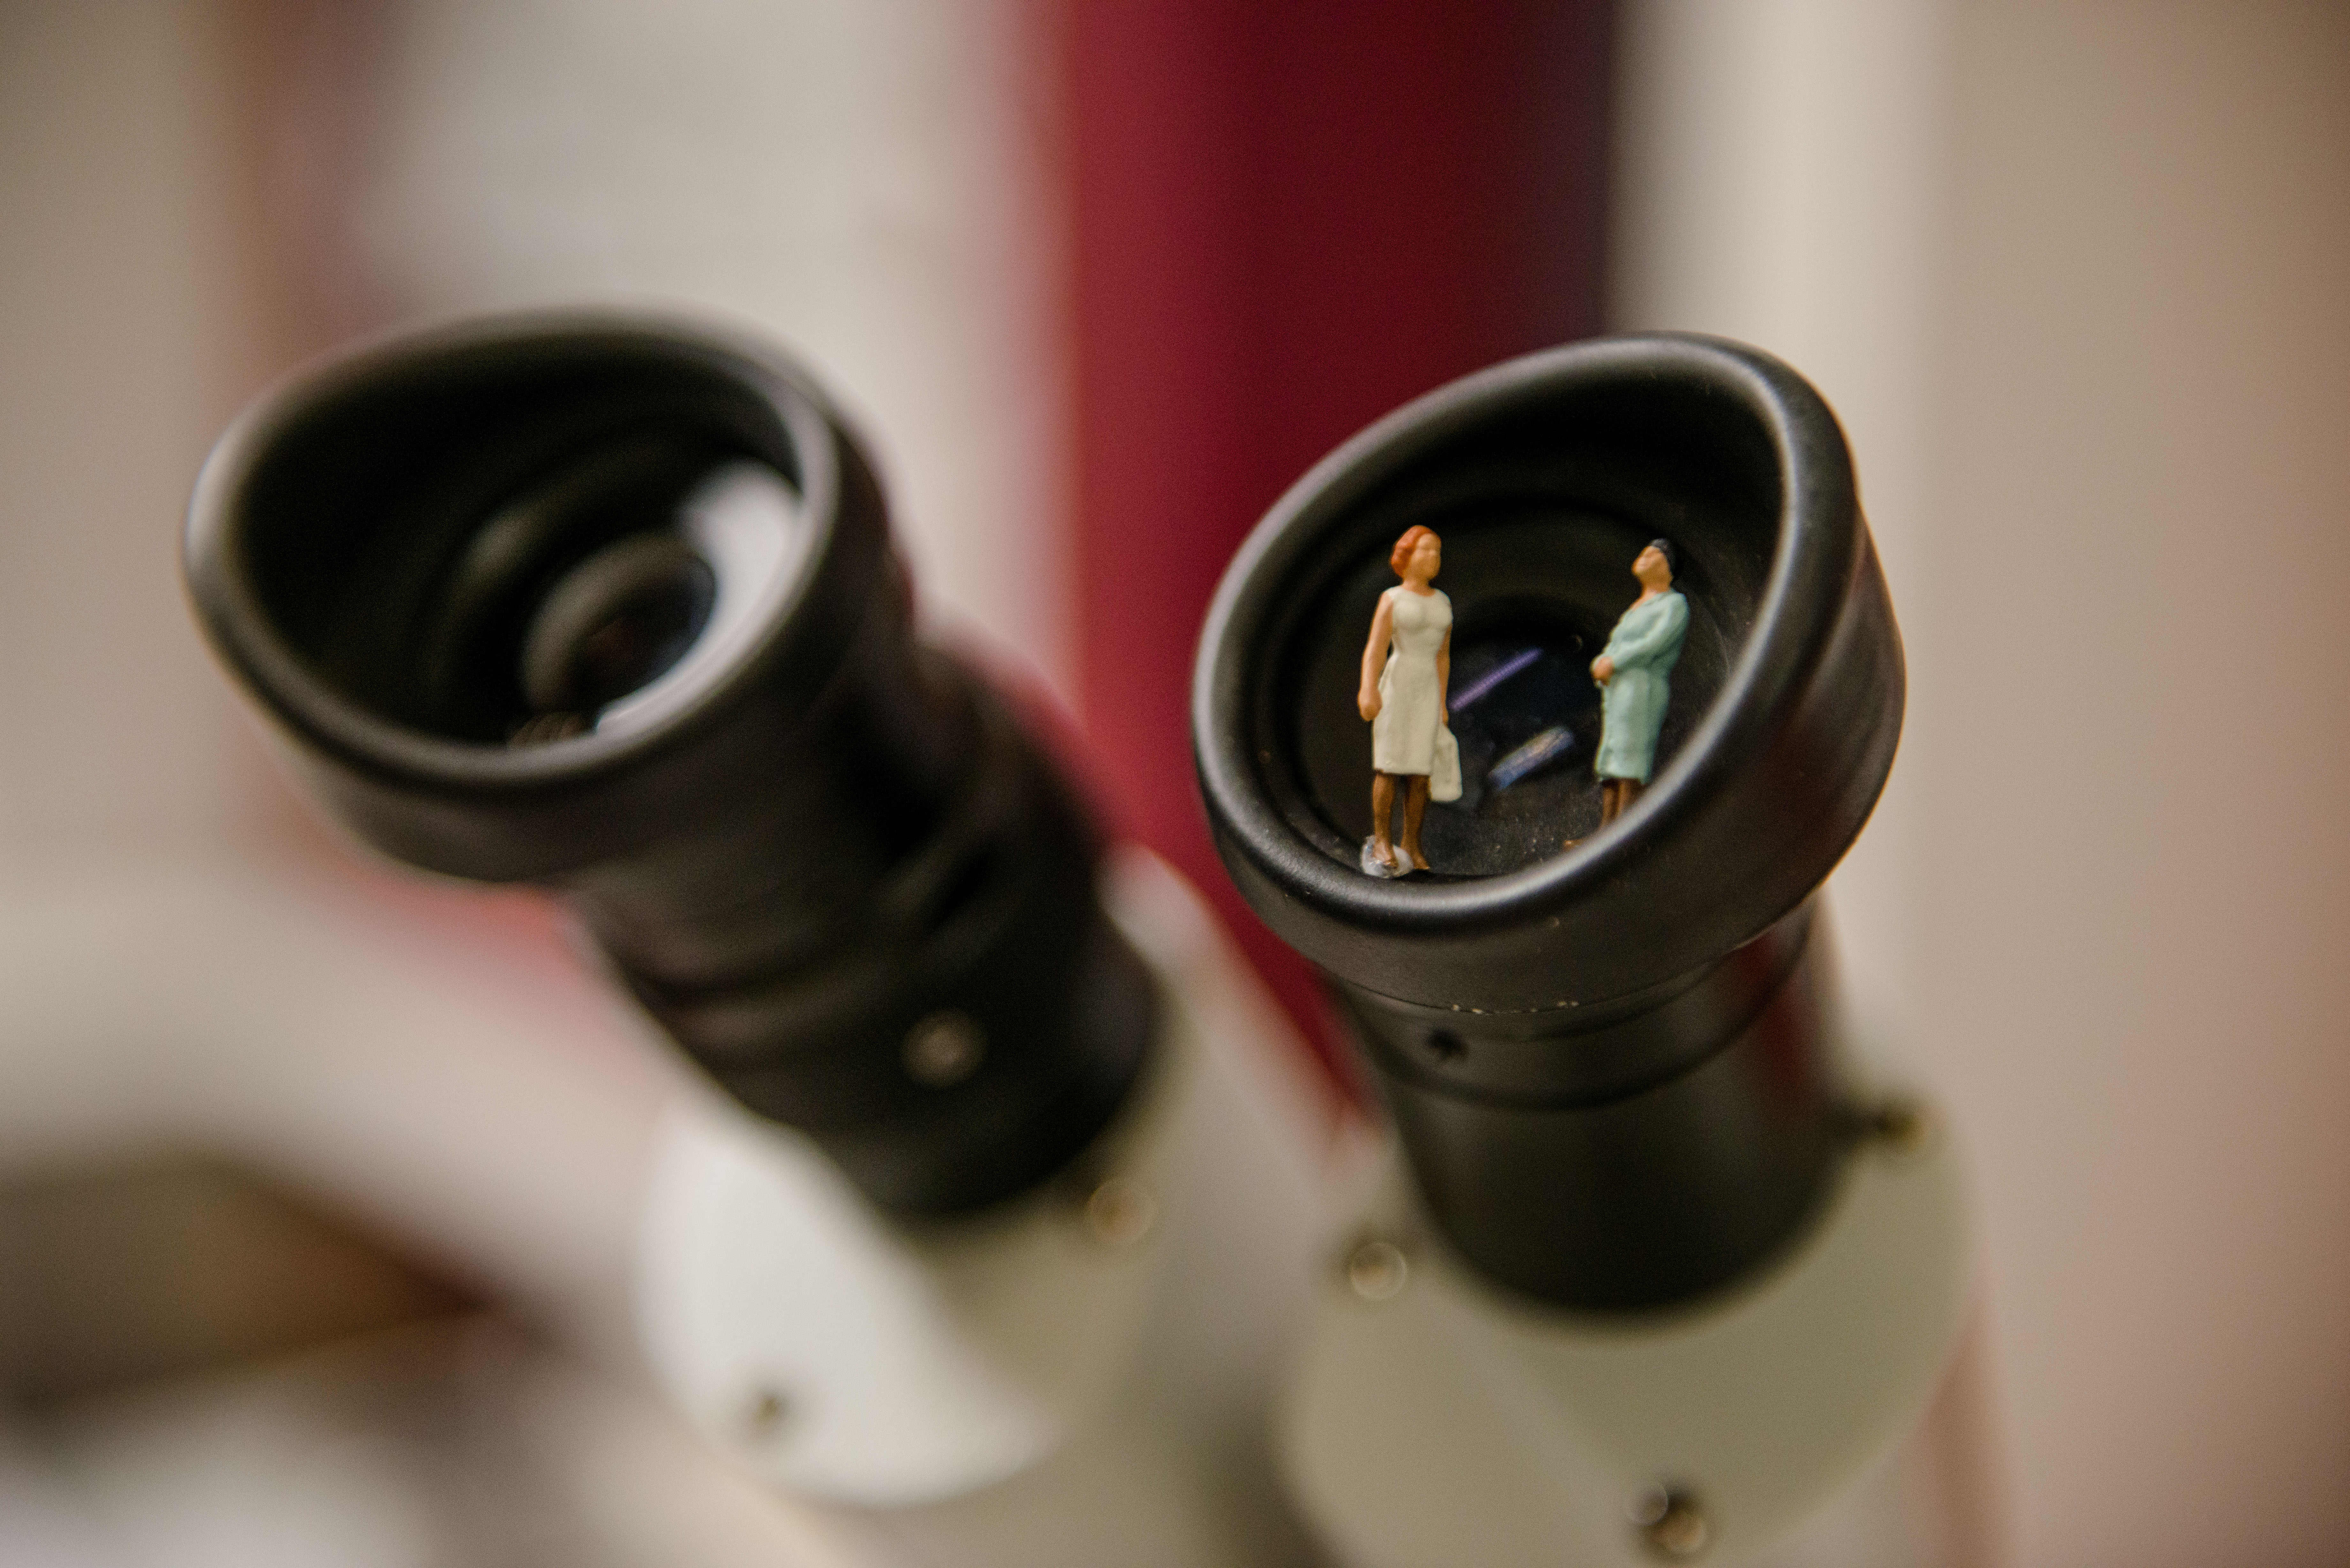 Puppen sitzen im Okular eines Mikroskops